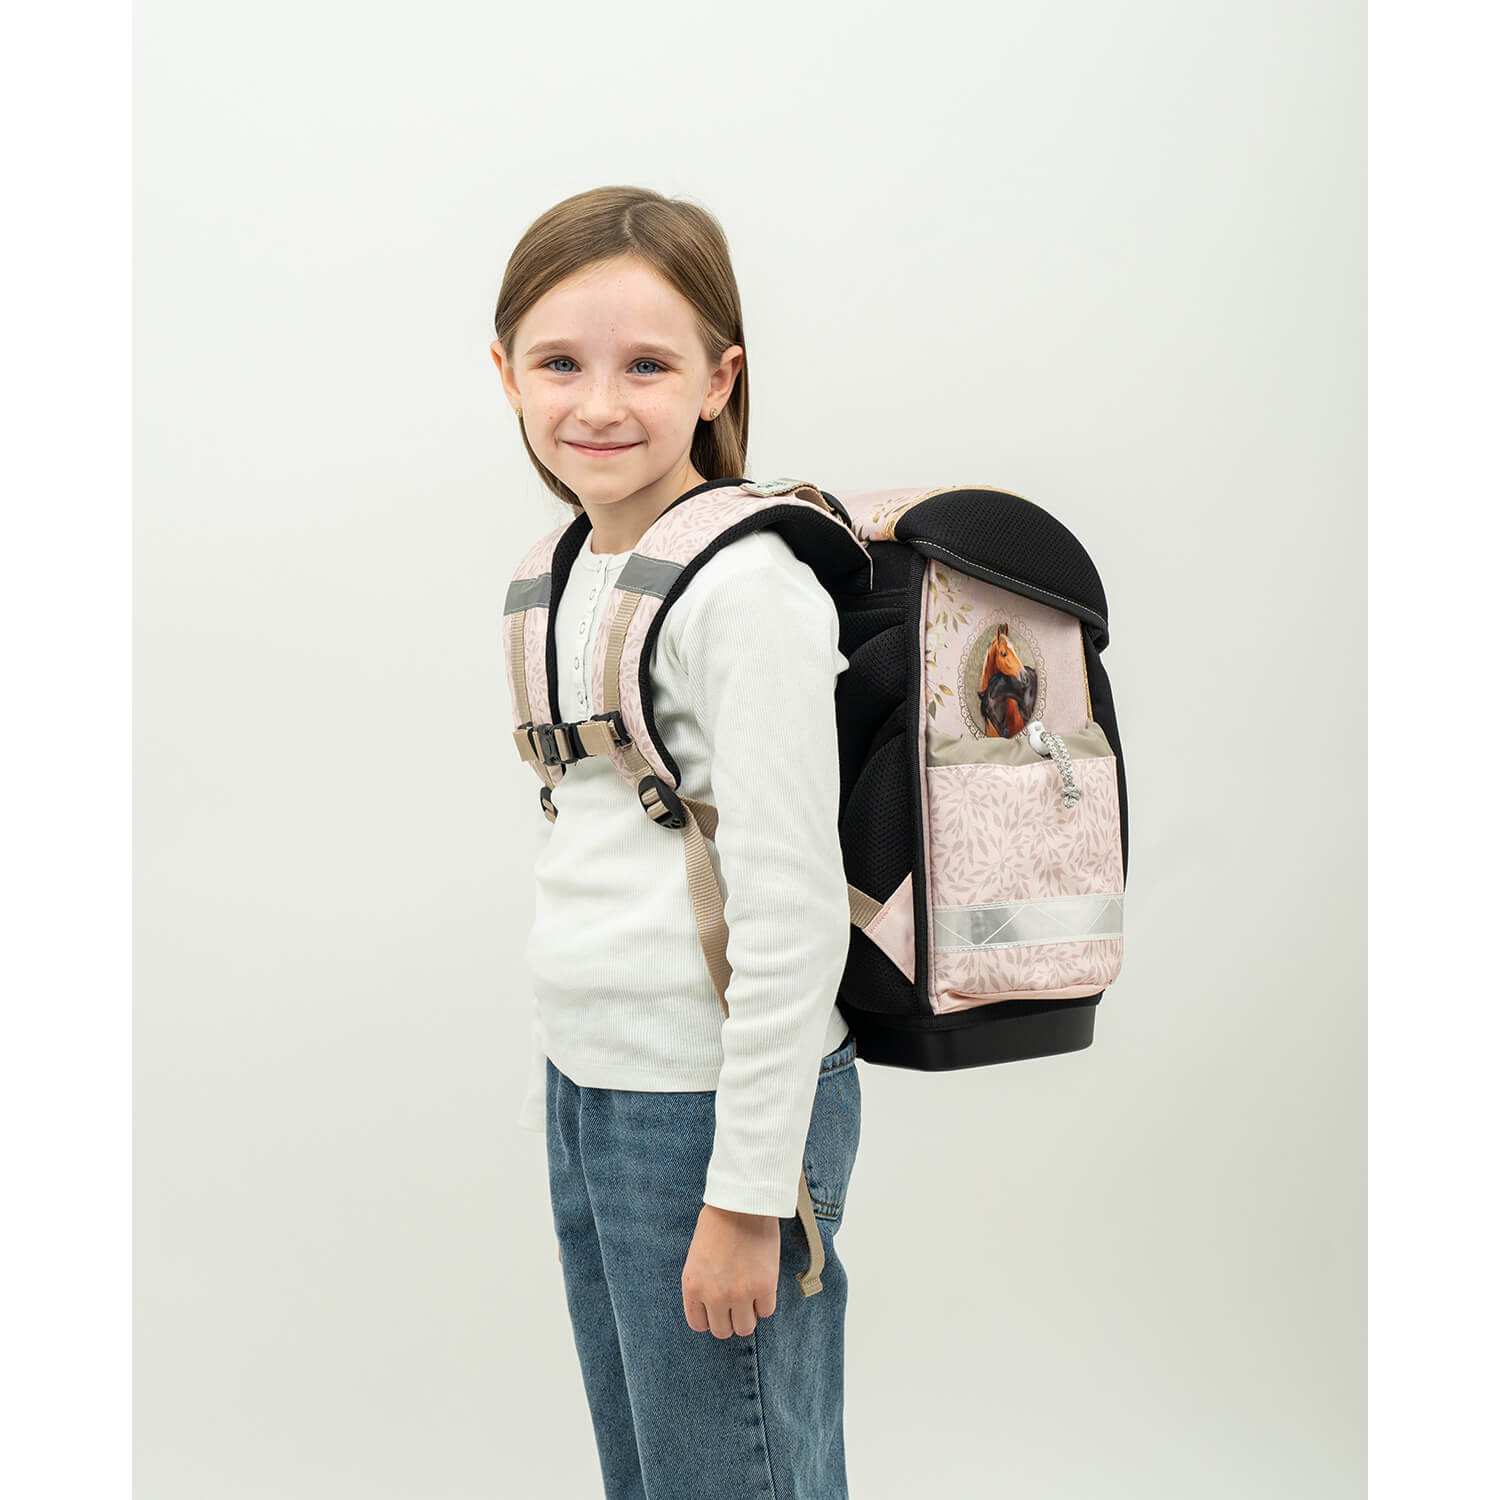 Classy Horse Chestnut schoolbag set 5 pcs with GRATIS keychain